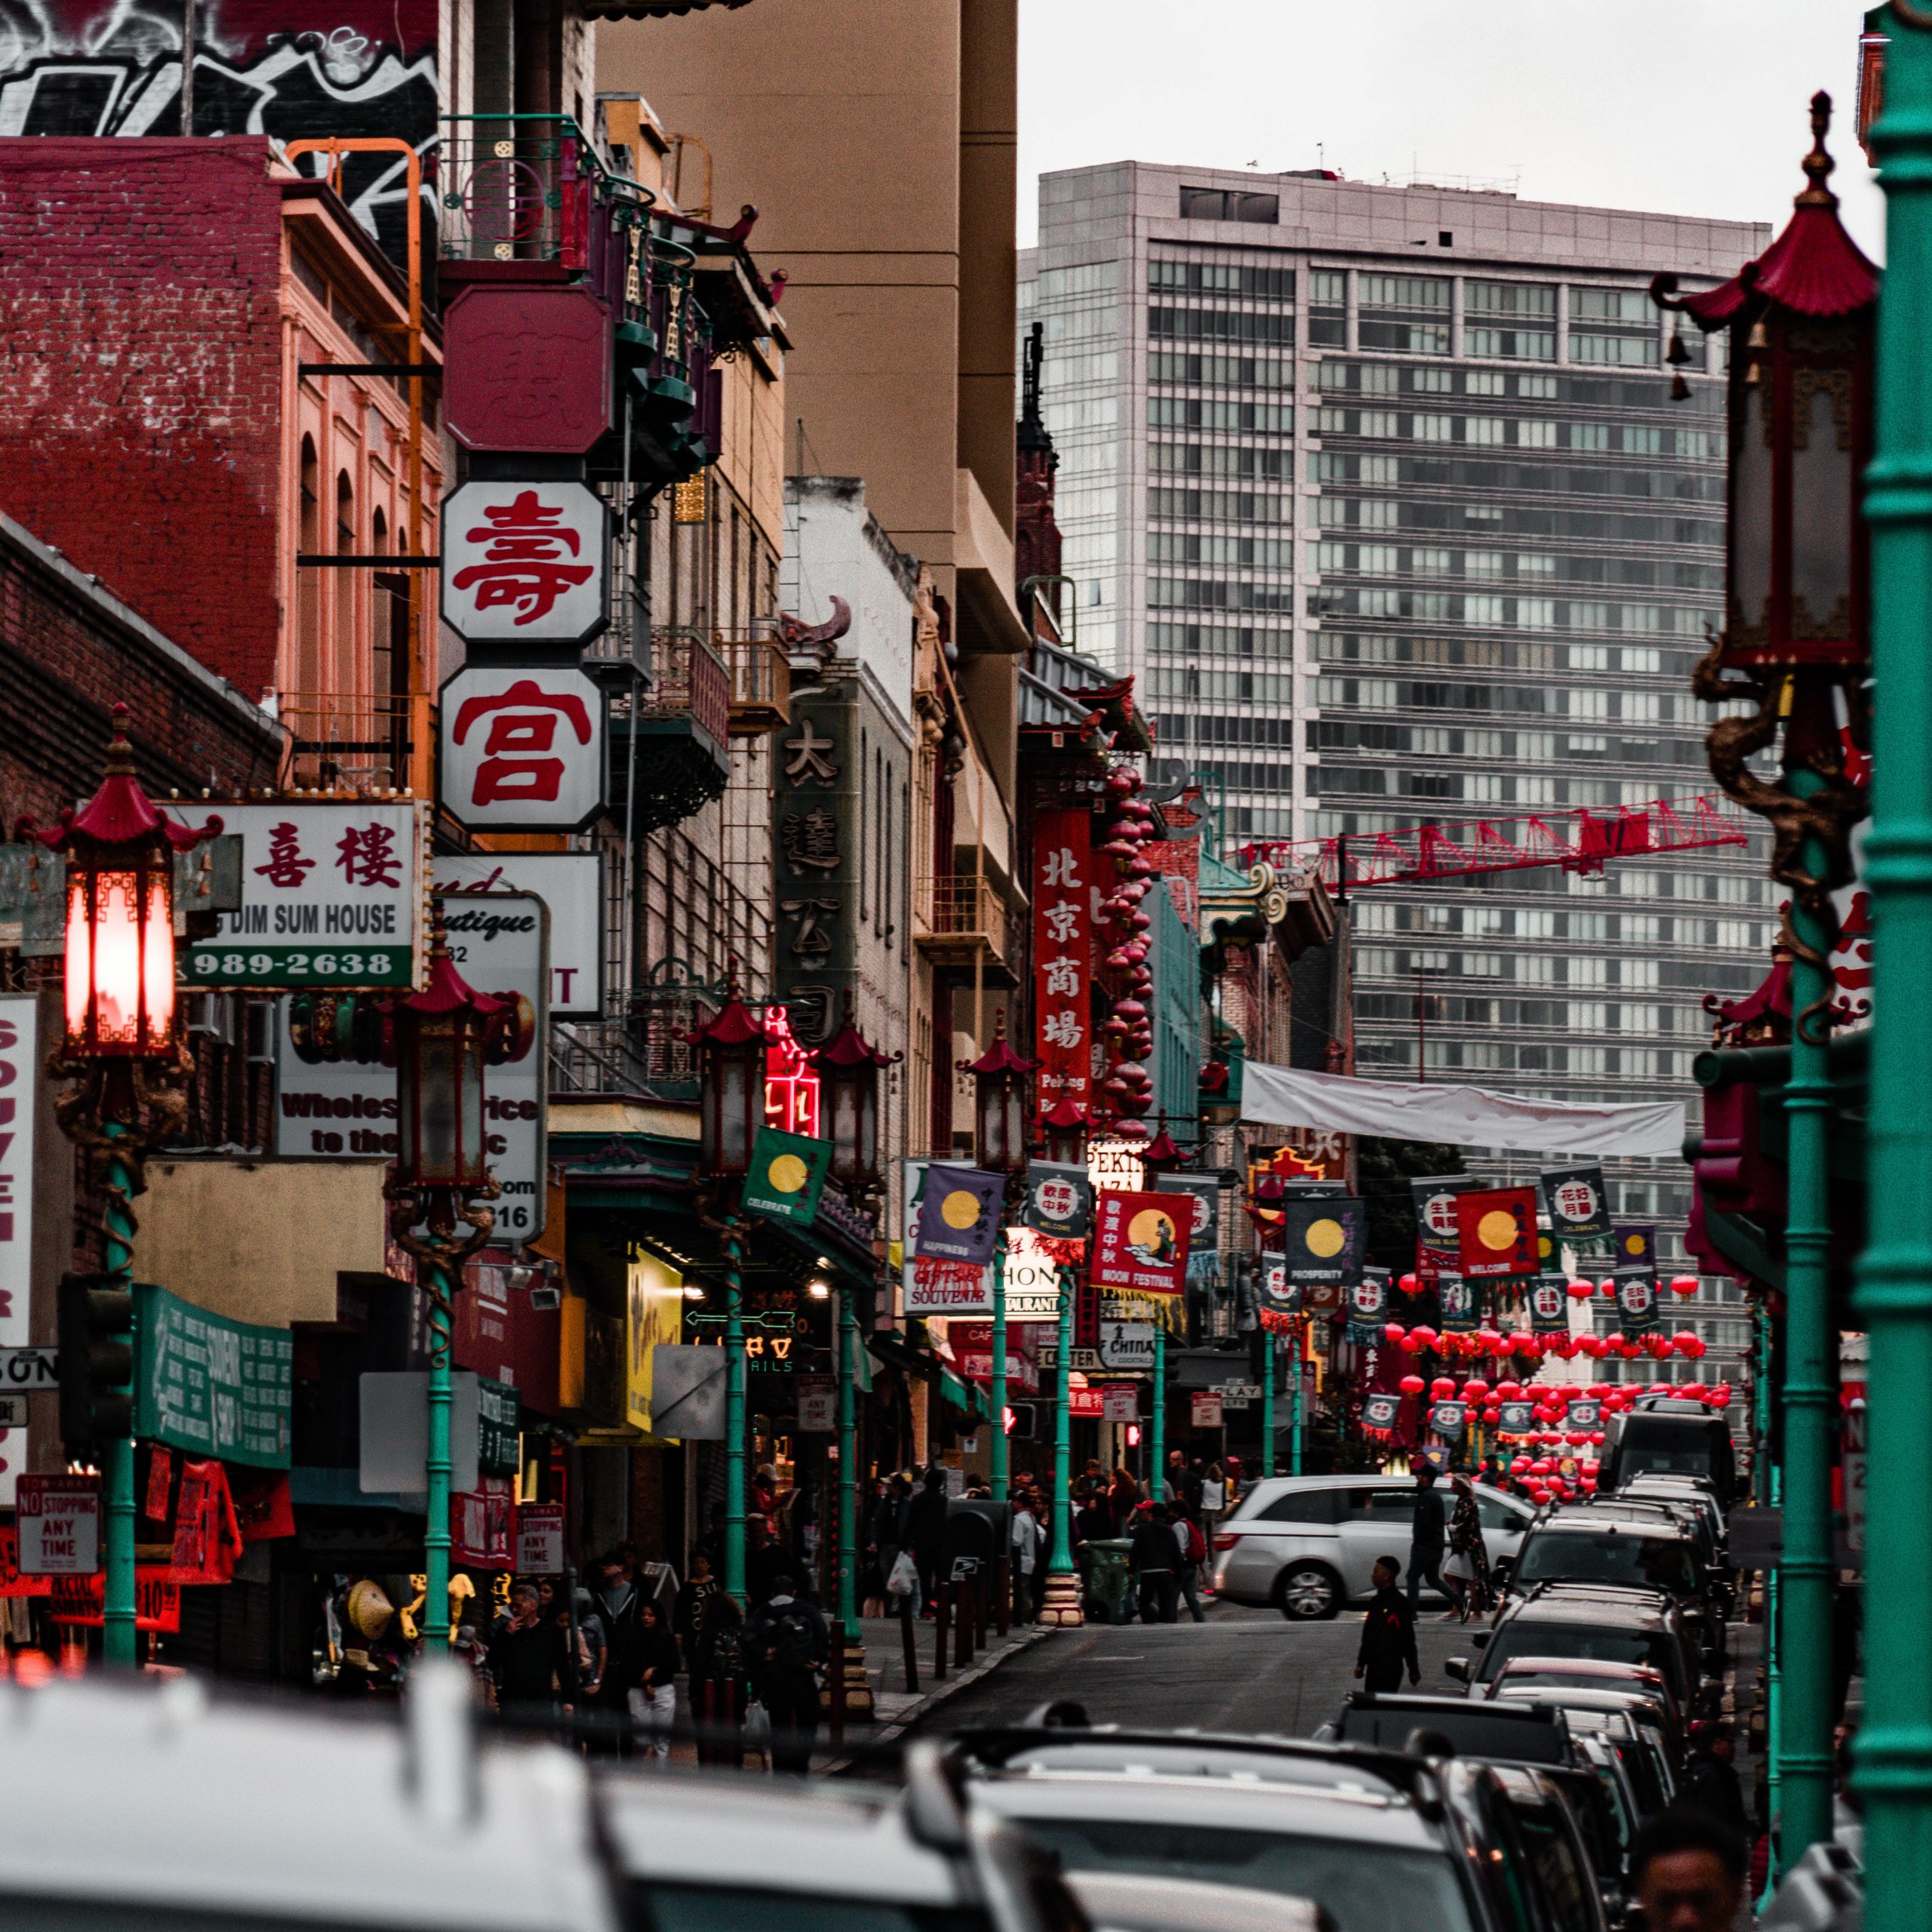 San Francisco Chinatown. Image: Matt Weng via Unsplash